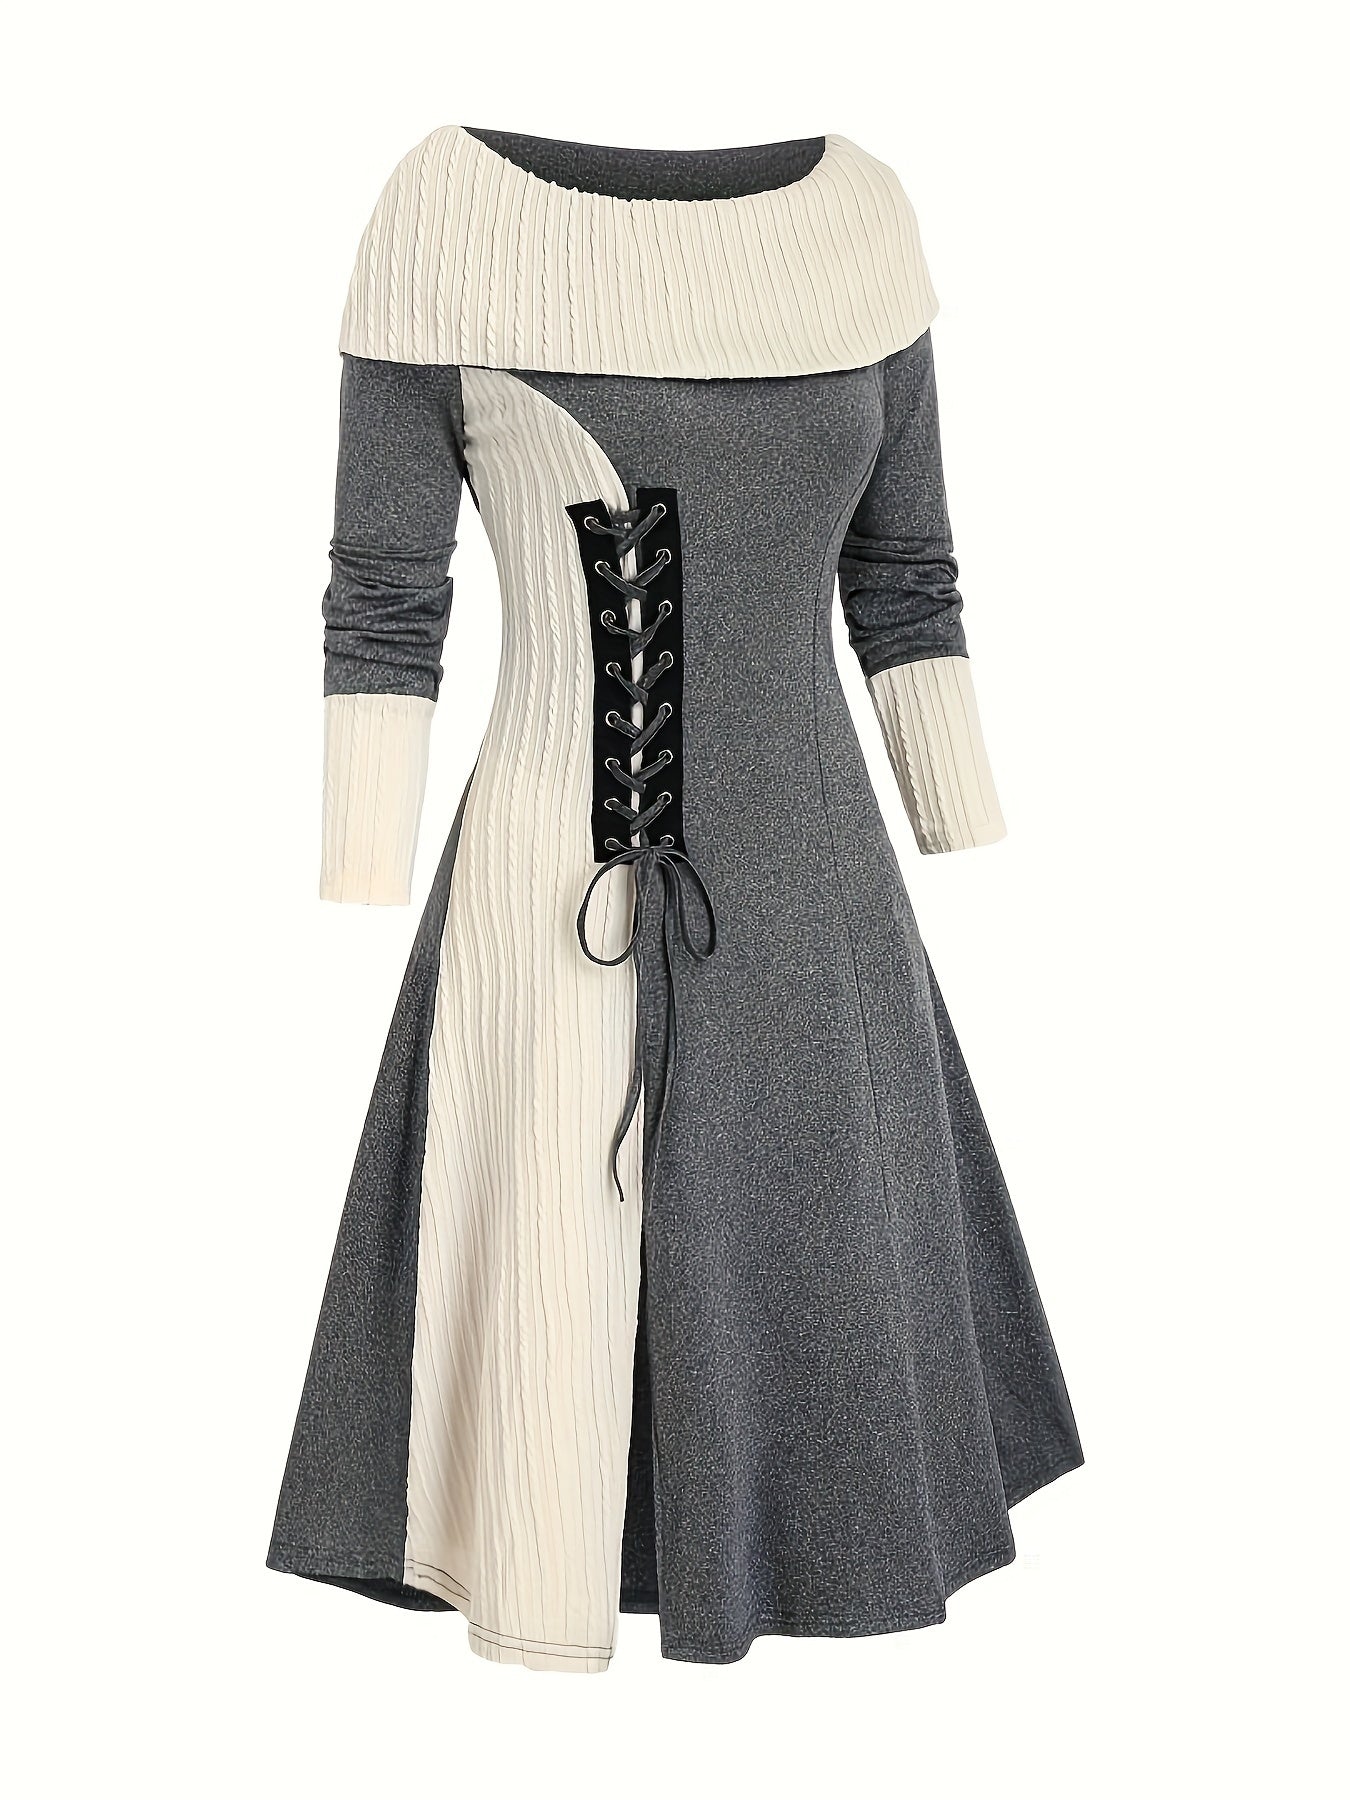 Plus Size Casual Dress, Women's Plus Colorblock Jacquard Long Sleeve Foldover Collar Lace Up Split Hem Dress